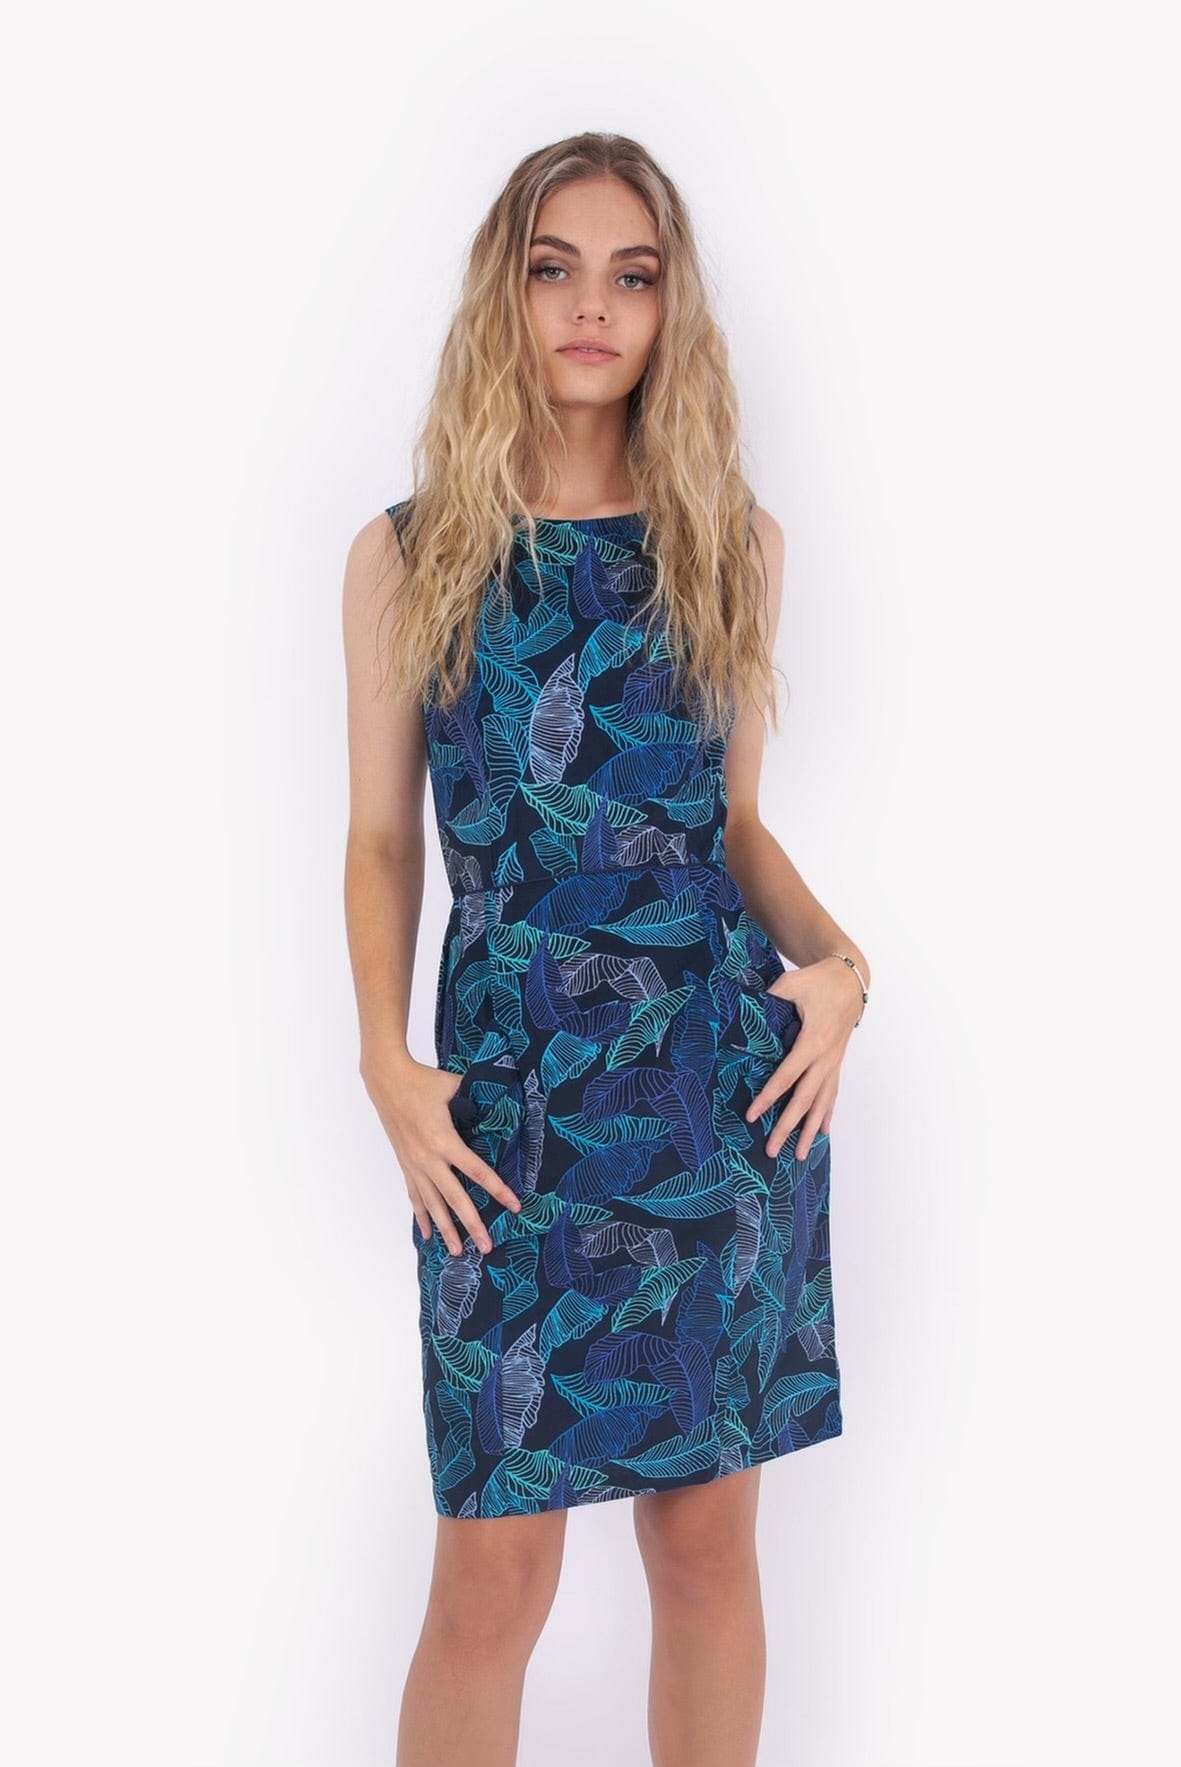 Sydney Dress - Navy Leaf - OM Designs - Splash Swimwear  - Dresses, Mar22, OM Designs - Splash Swimwear 